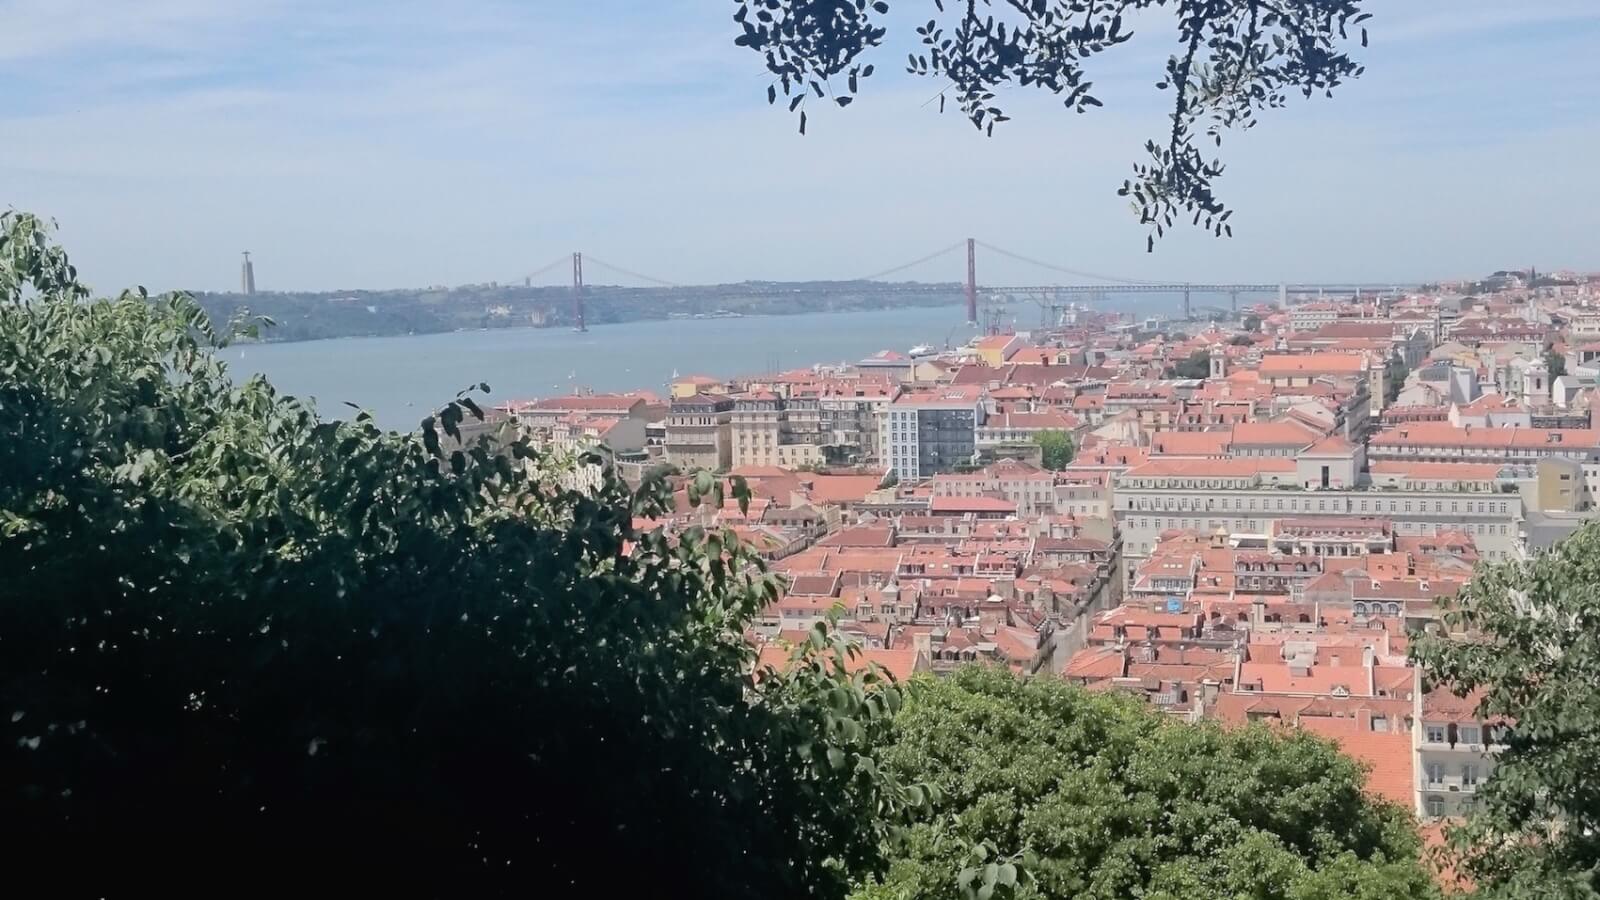 Visiting Castelo de Sao Jorge during 3 days in Lisbon